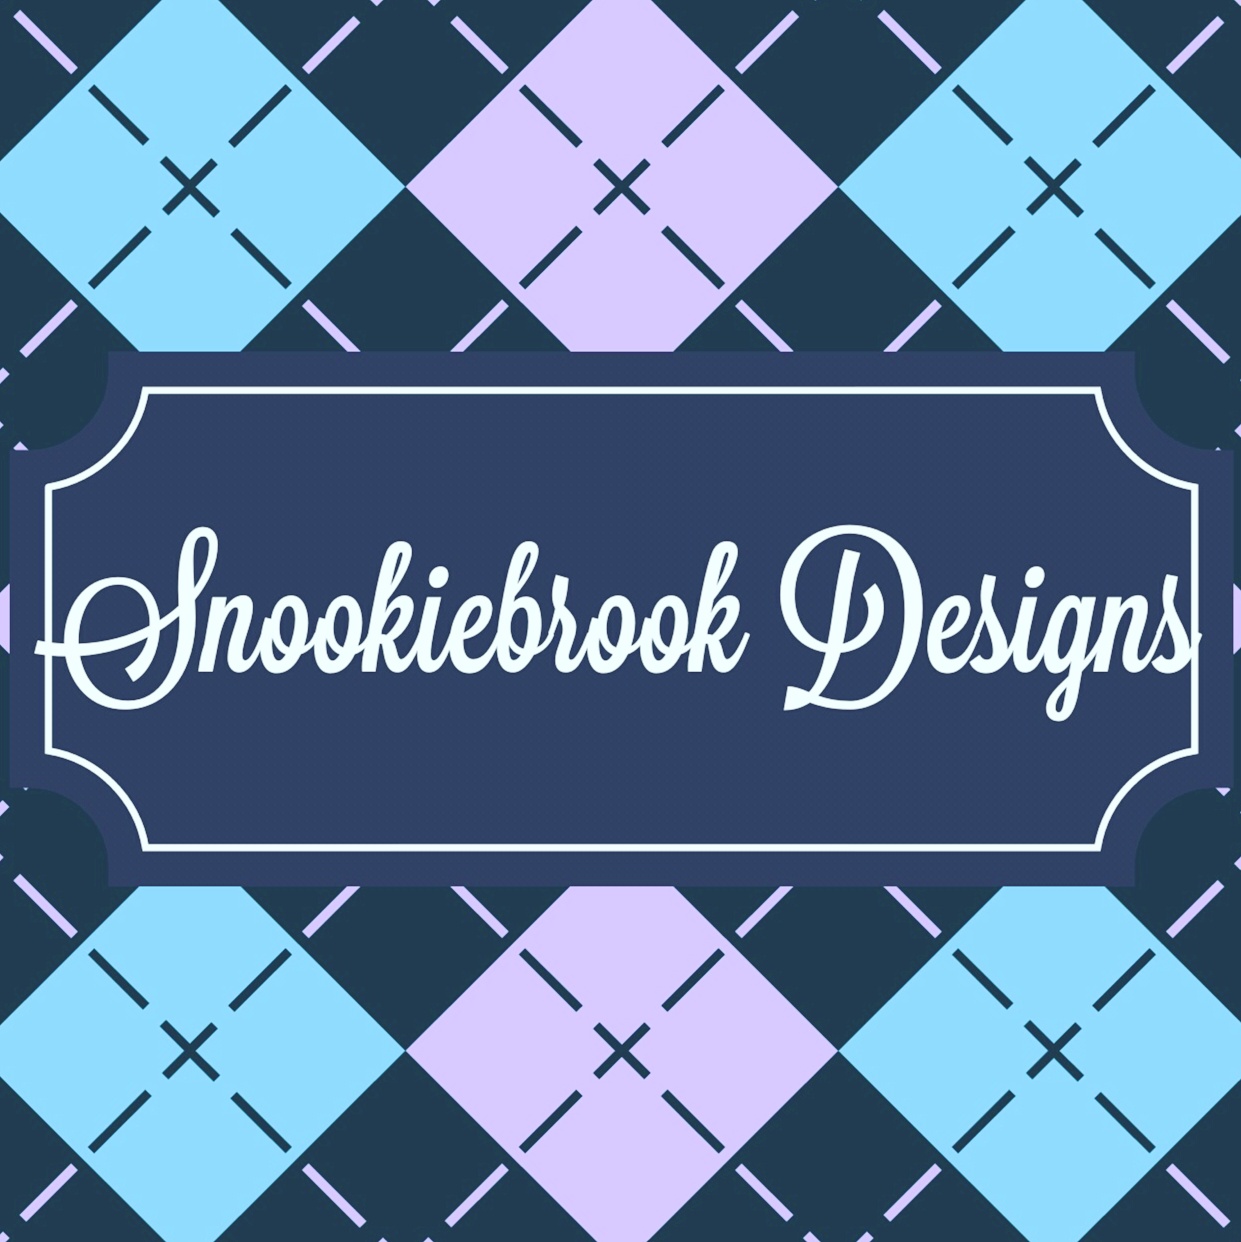 Snookiebrook Designs